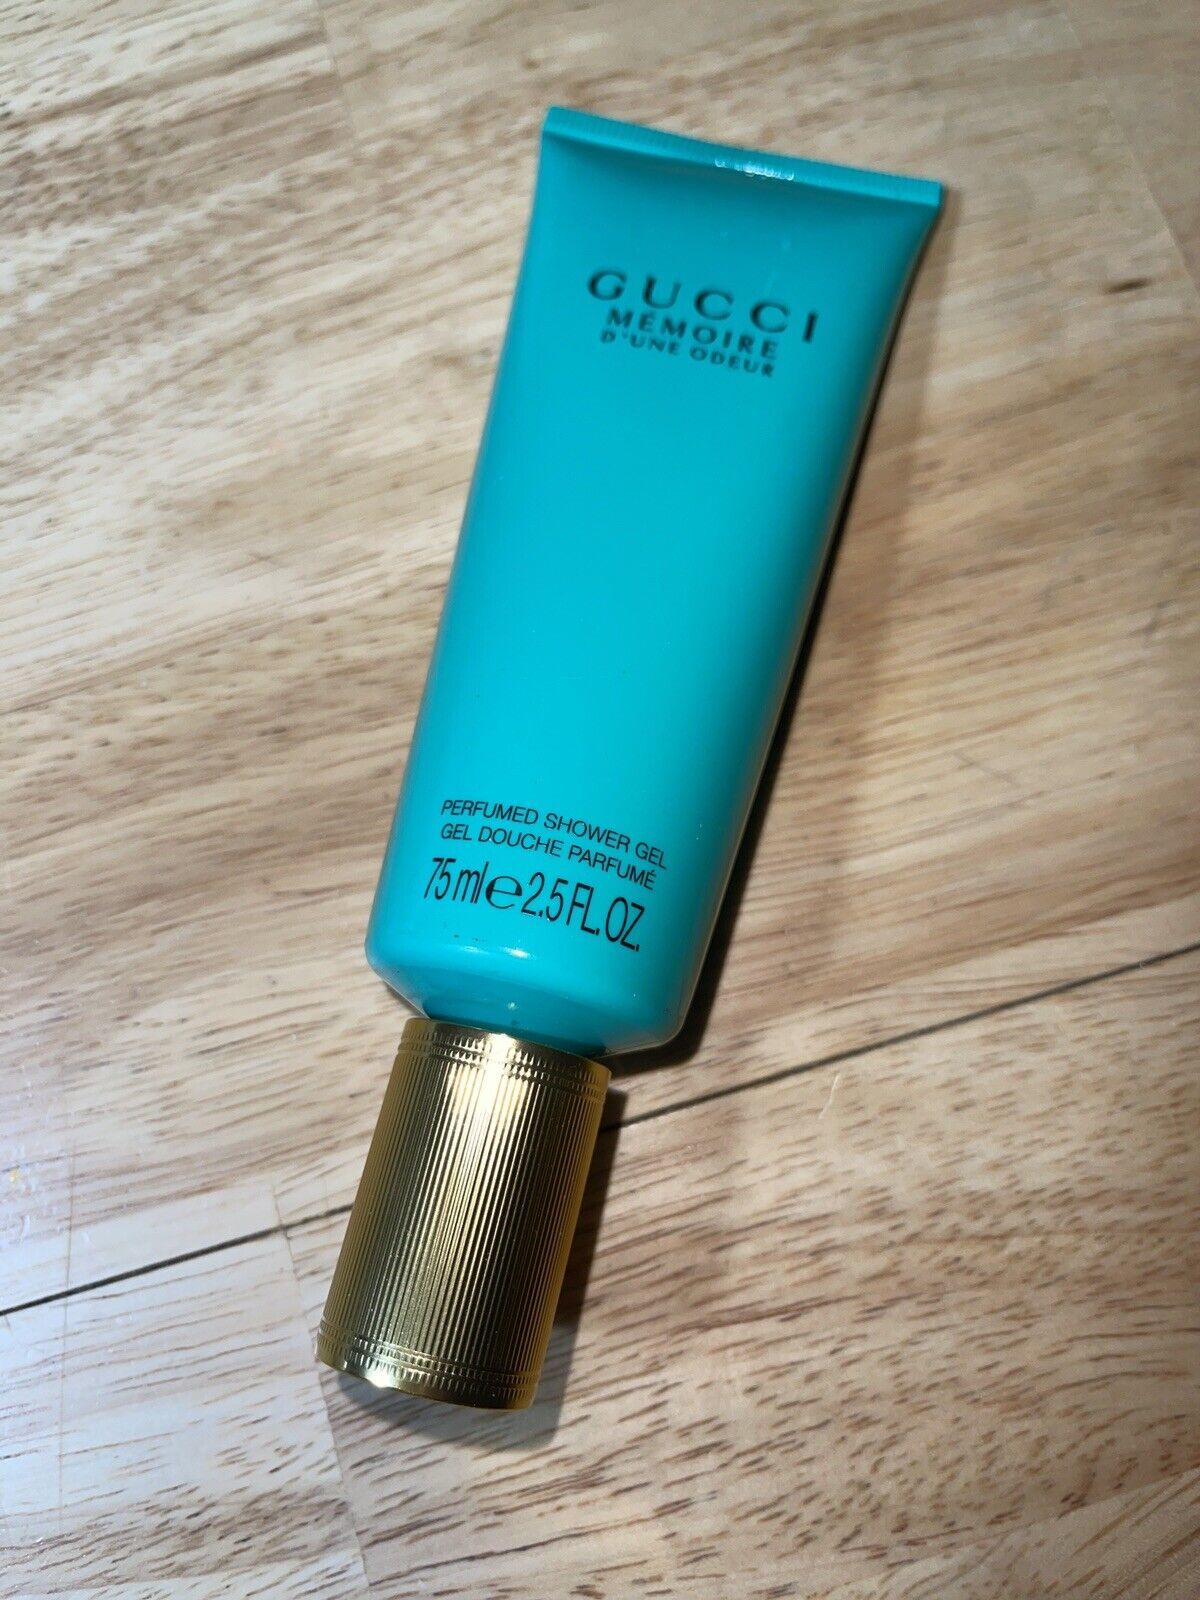 NEW SEALED Gucci Memoire d'une Odeur Perfumed SHOWER GEL 2.5oz Gel Douche - $9.99